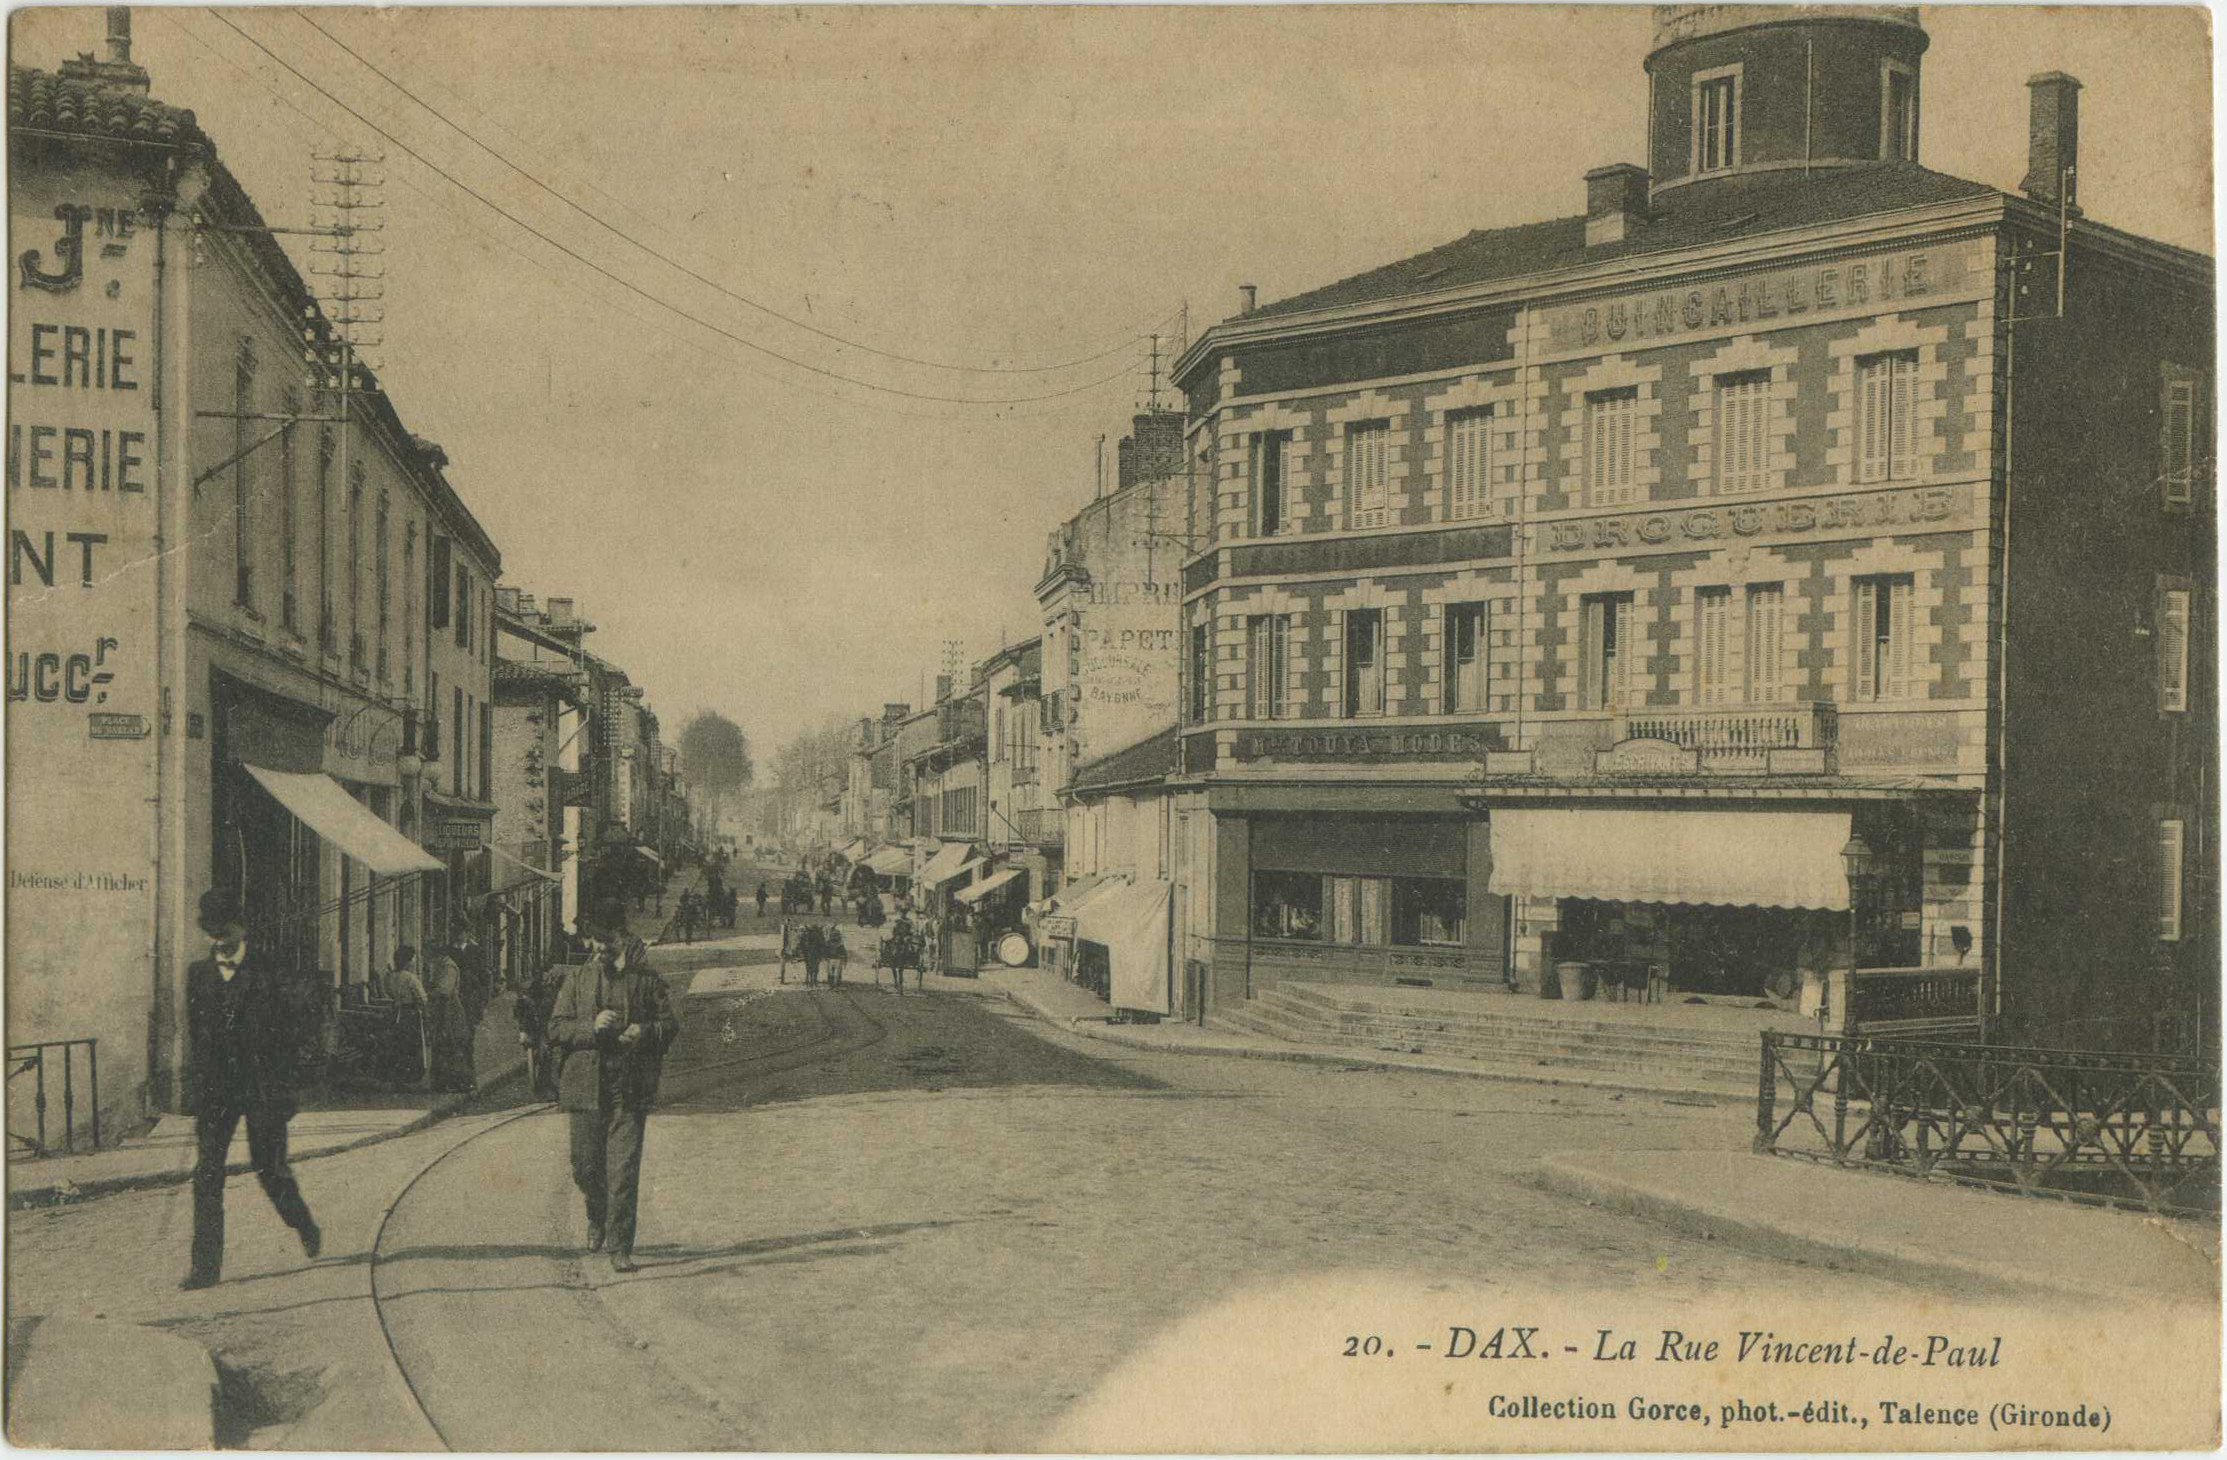 Dax - La Rue Vincent-de-Paul